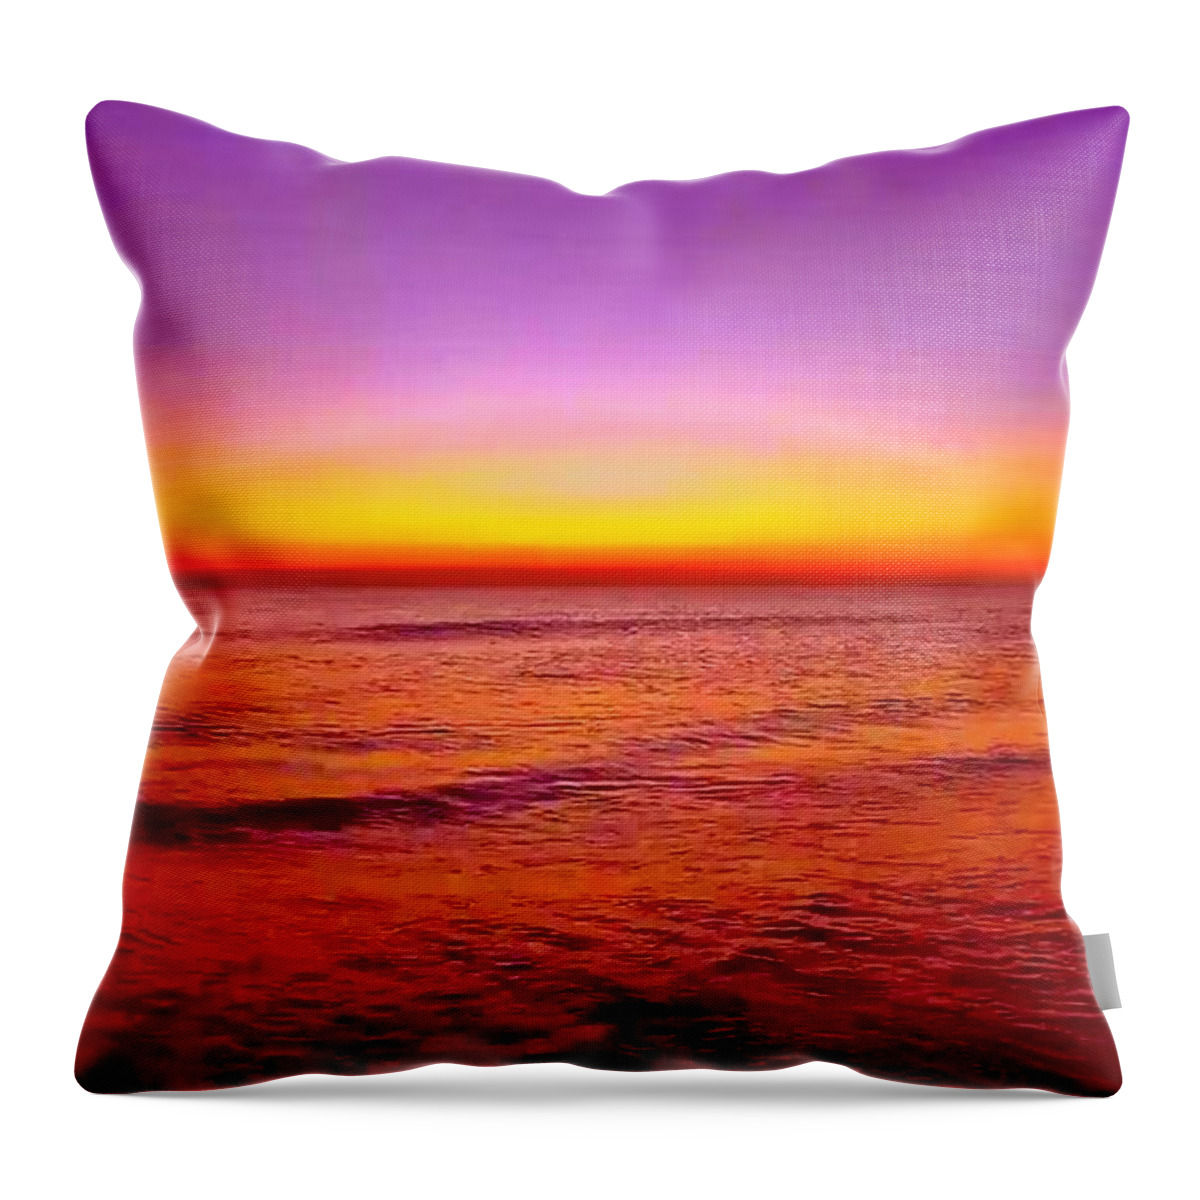 Sunrise Throw Pillow featuring the photograph Sunrise Beach 6 by Rip Read